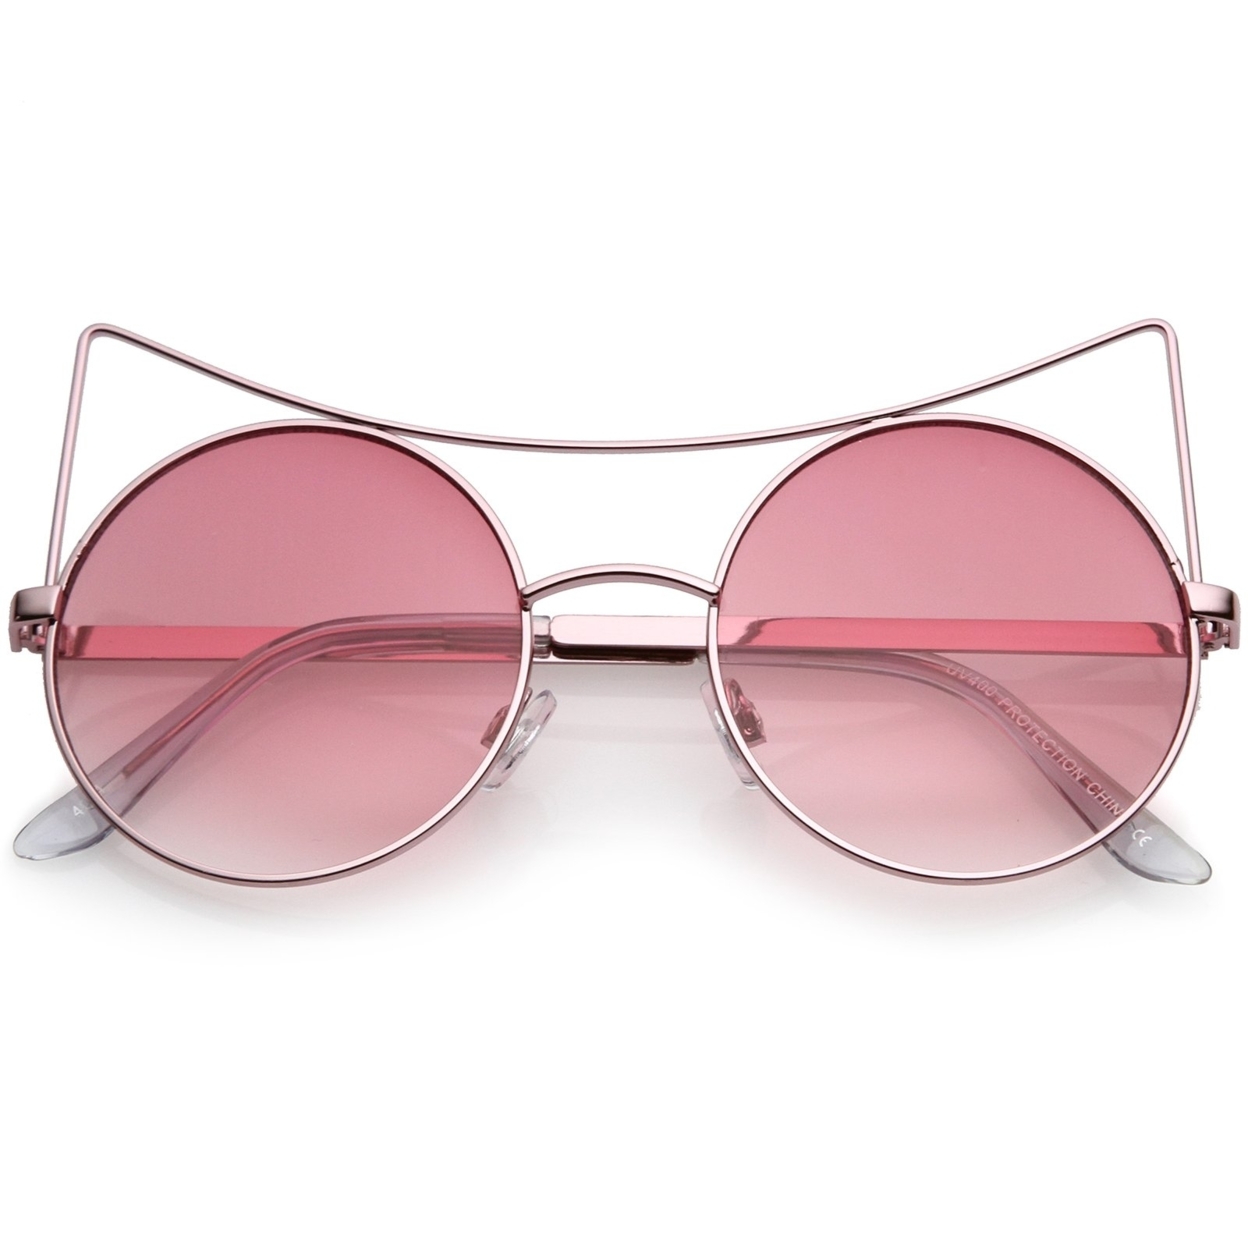 Women's Oversize Open Metal Gradient Round Flat Lens Cat Eye Sunglasses 54mm - Silver / Lavender